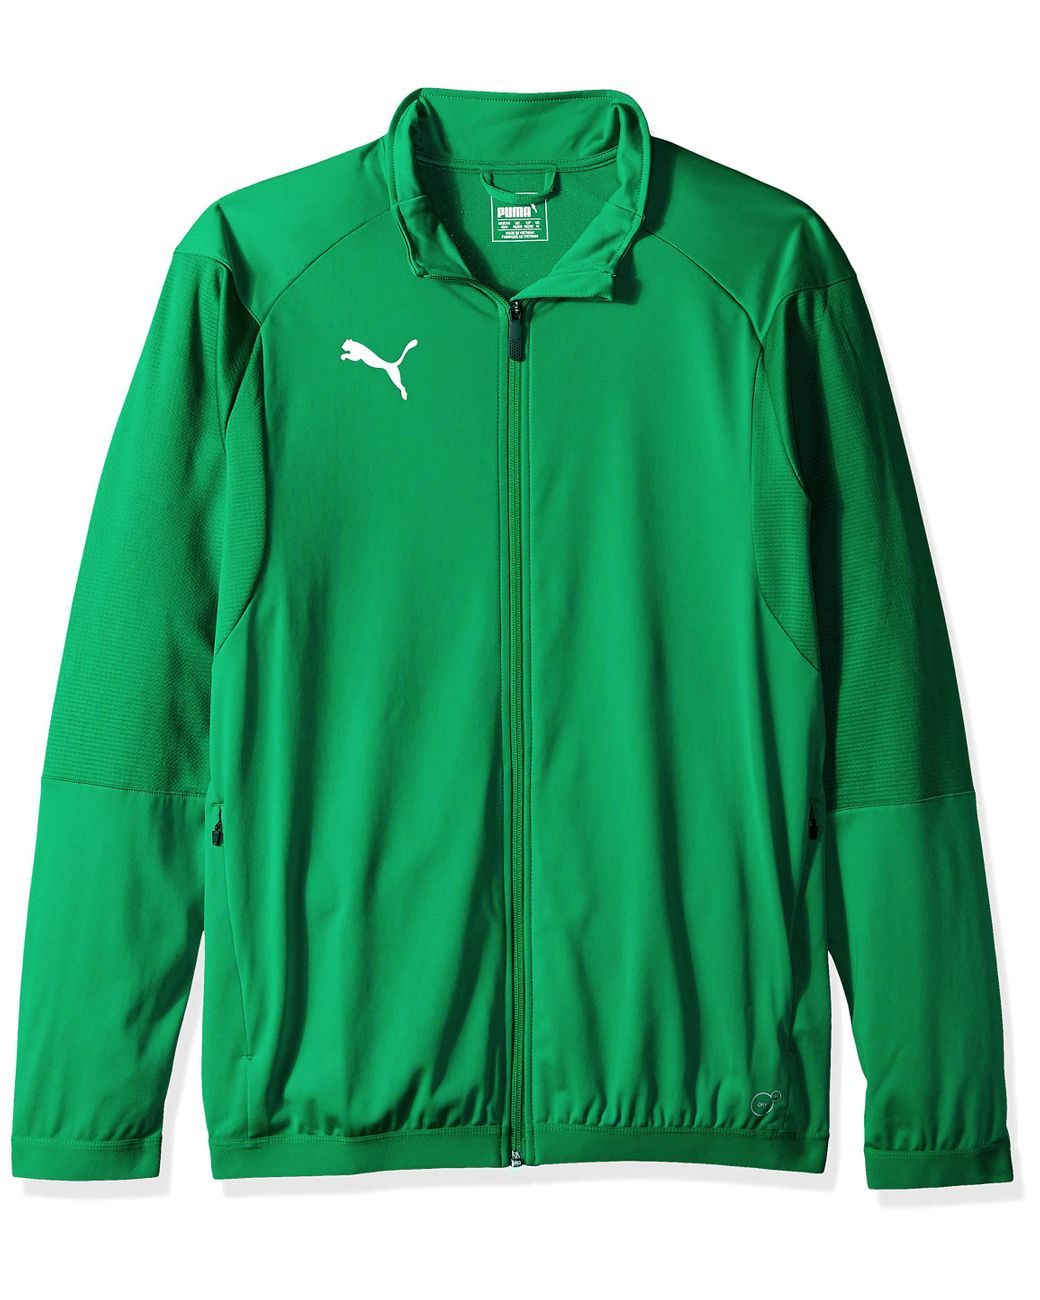 PUMA Liga Training Jacket in Green for Men - Save 17% - Lyst